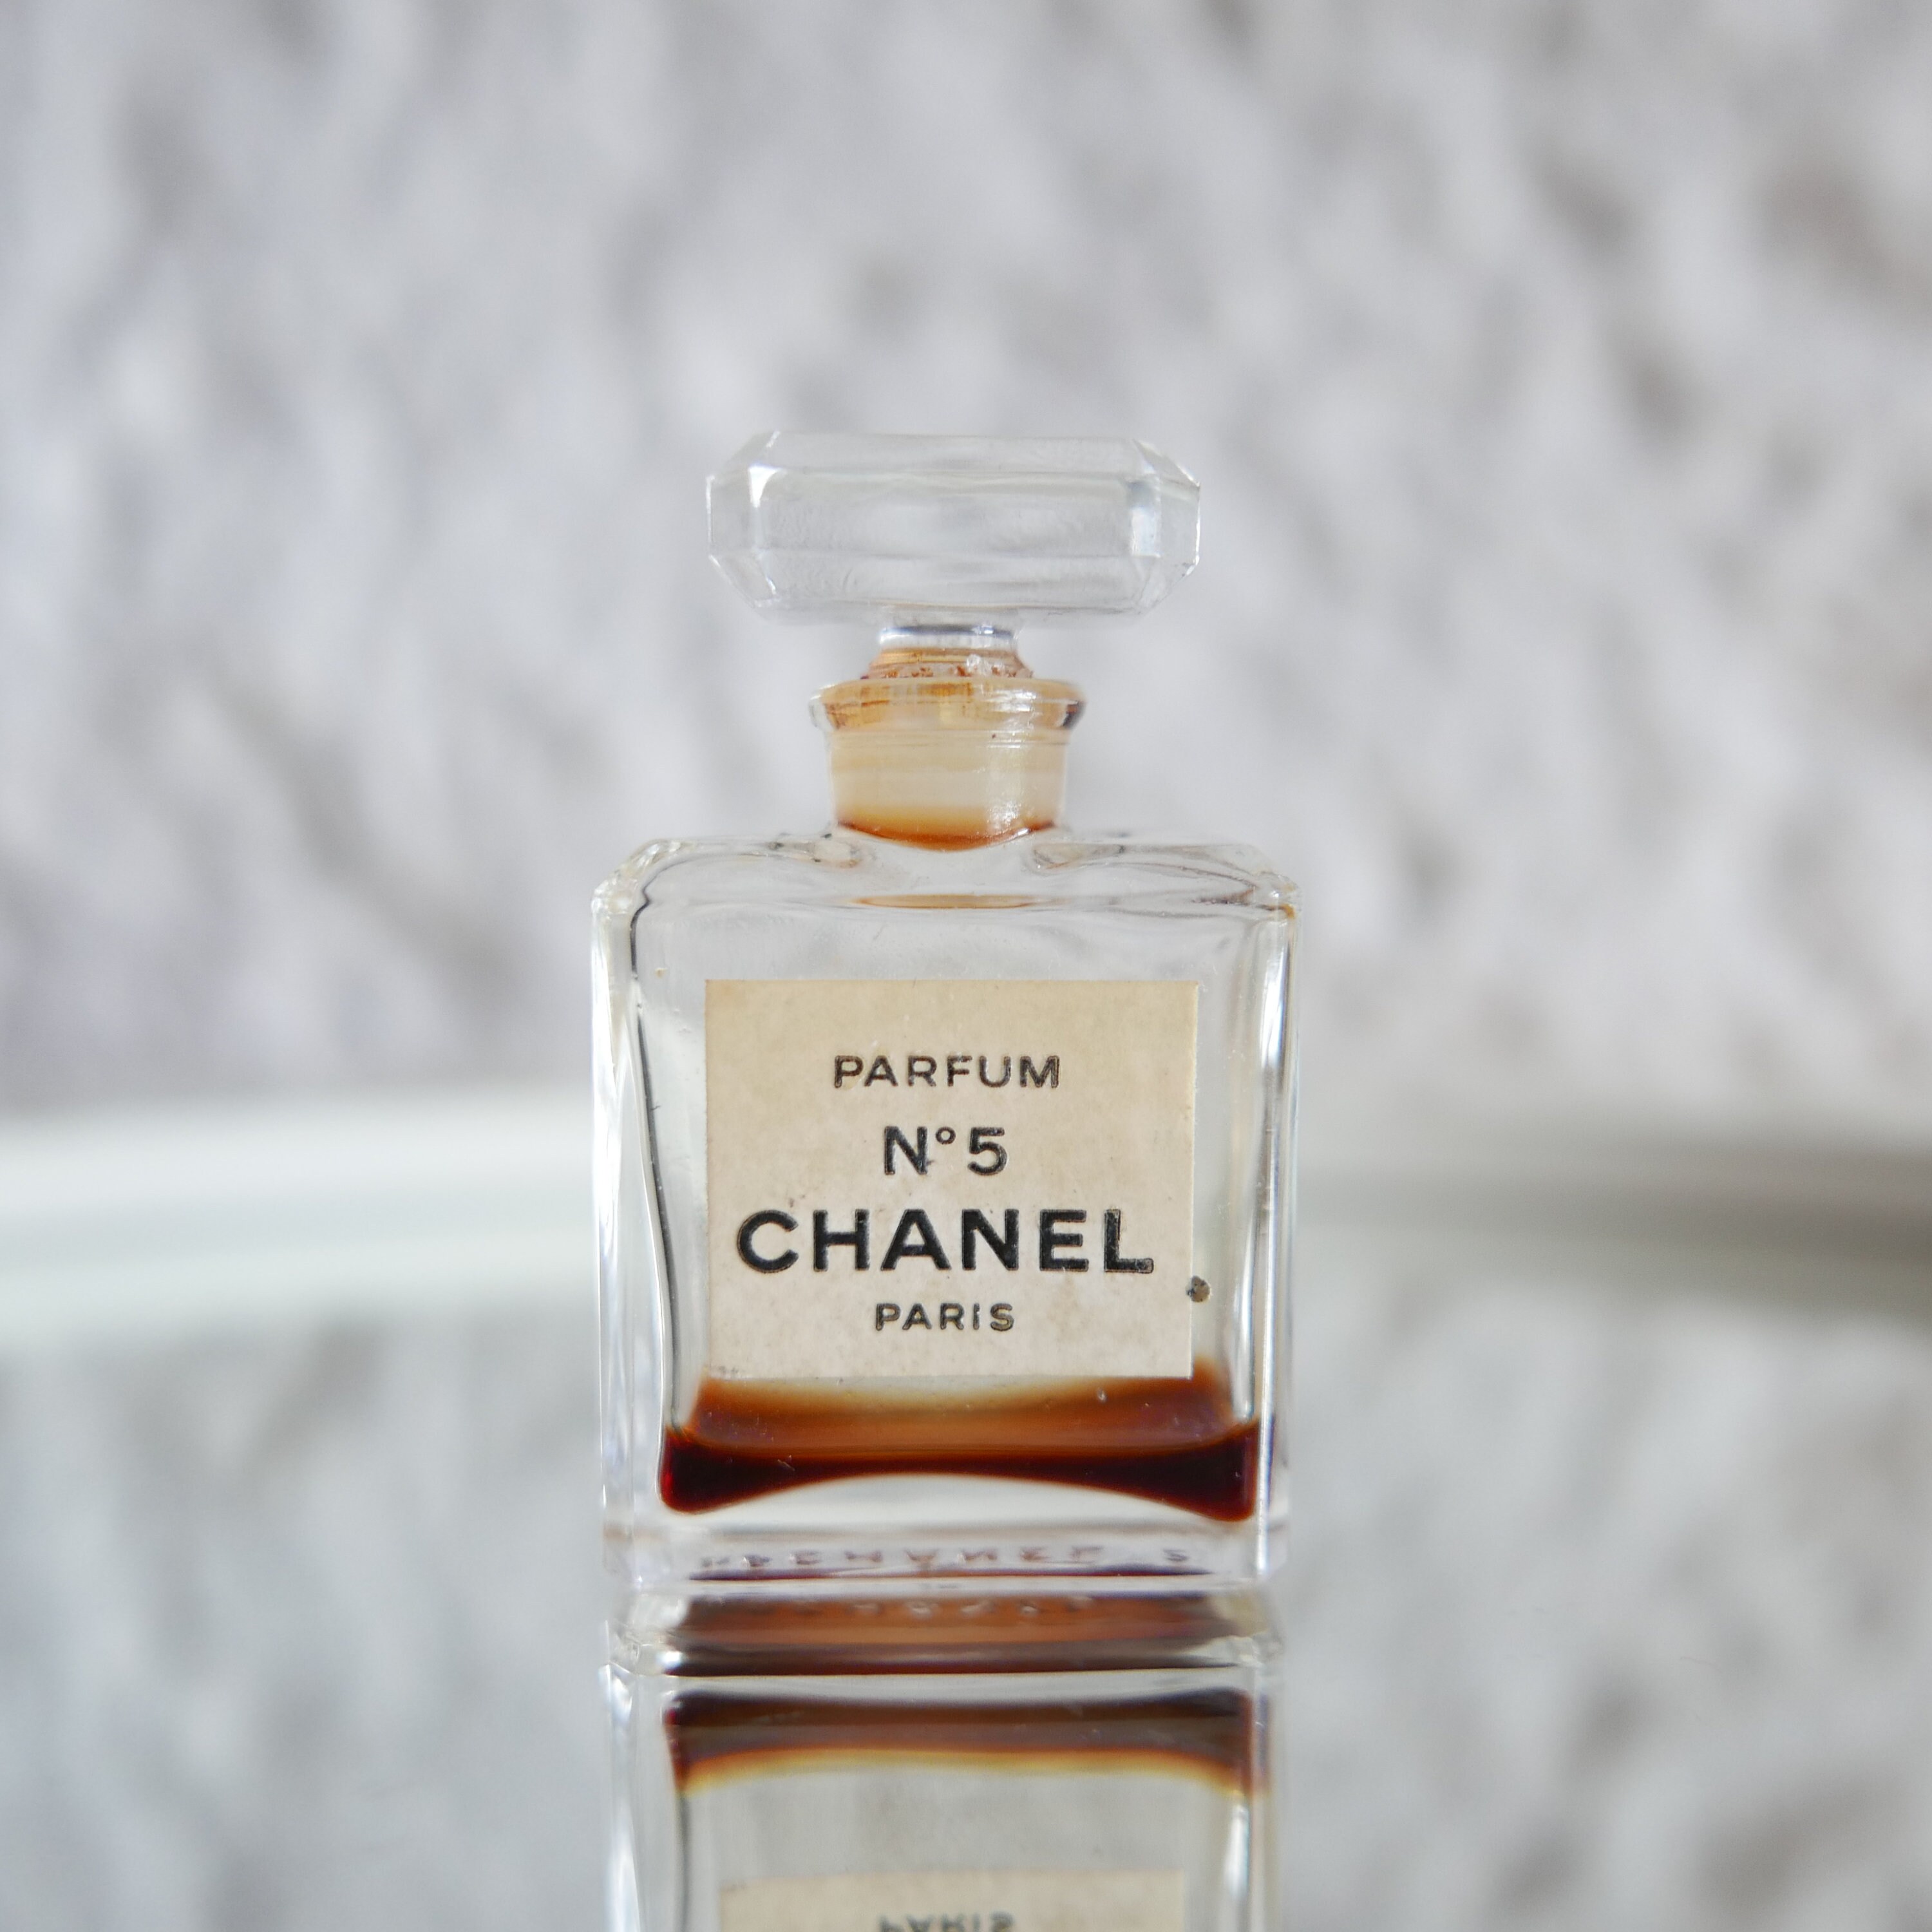 Chanel Factice -  UK